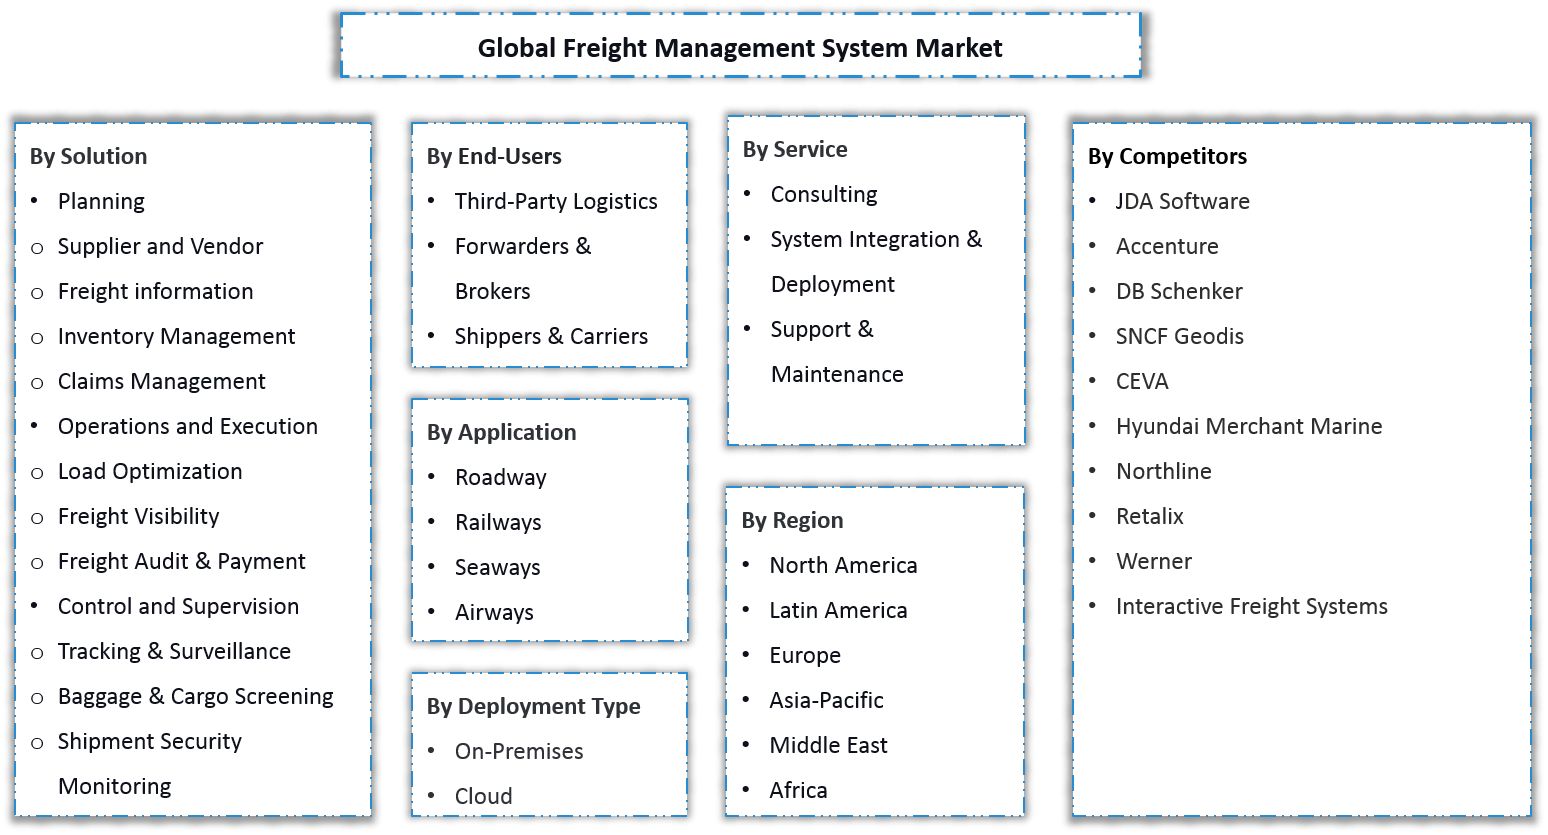 Global Freight Management System Market Segmentation